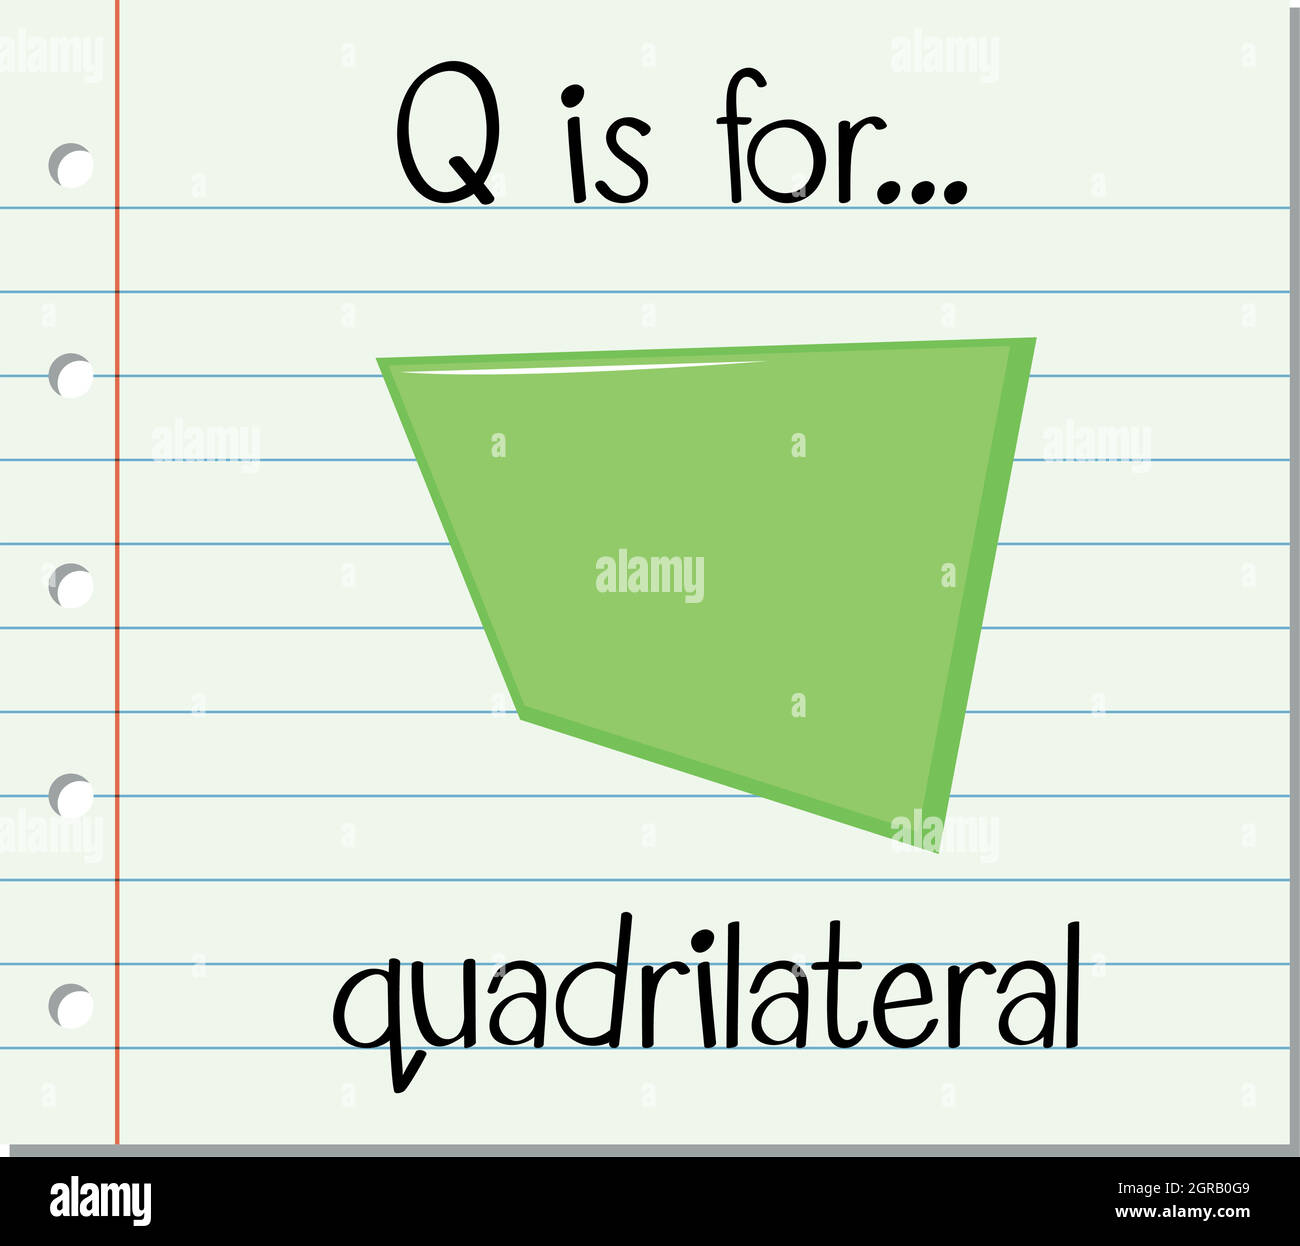 Day 16 - Quadrilaterals Flip Book